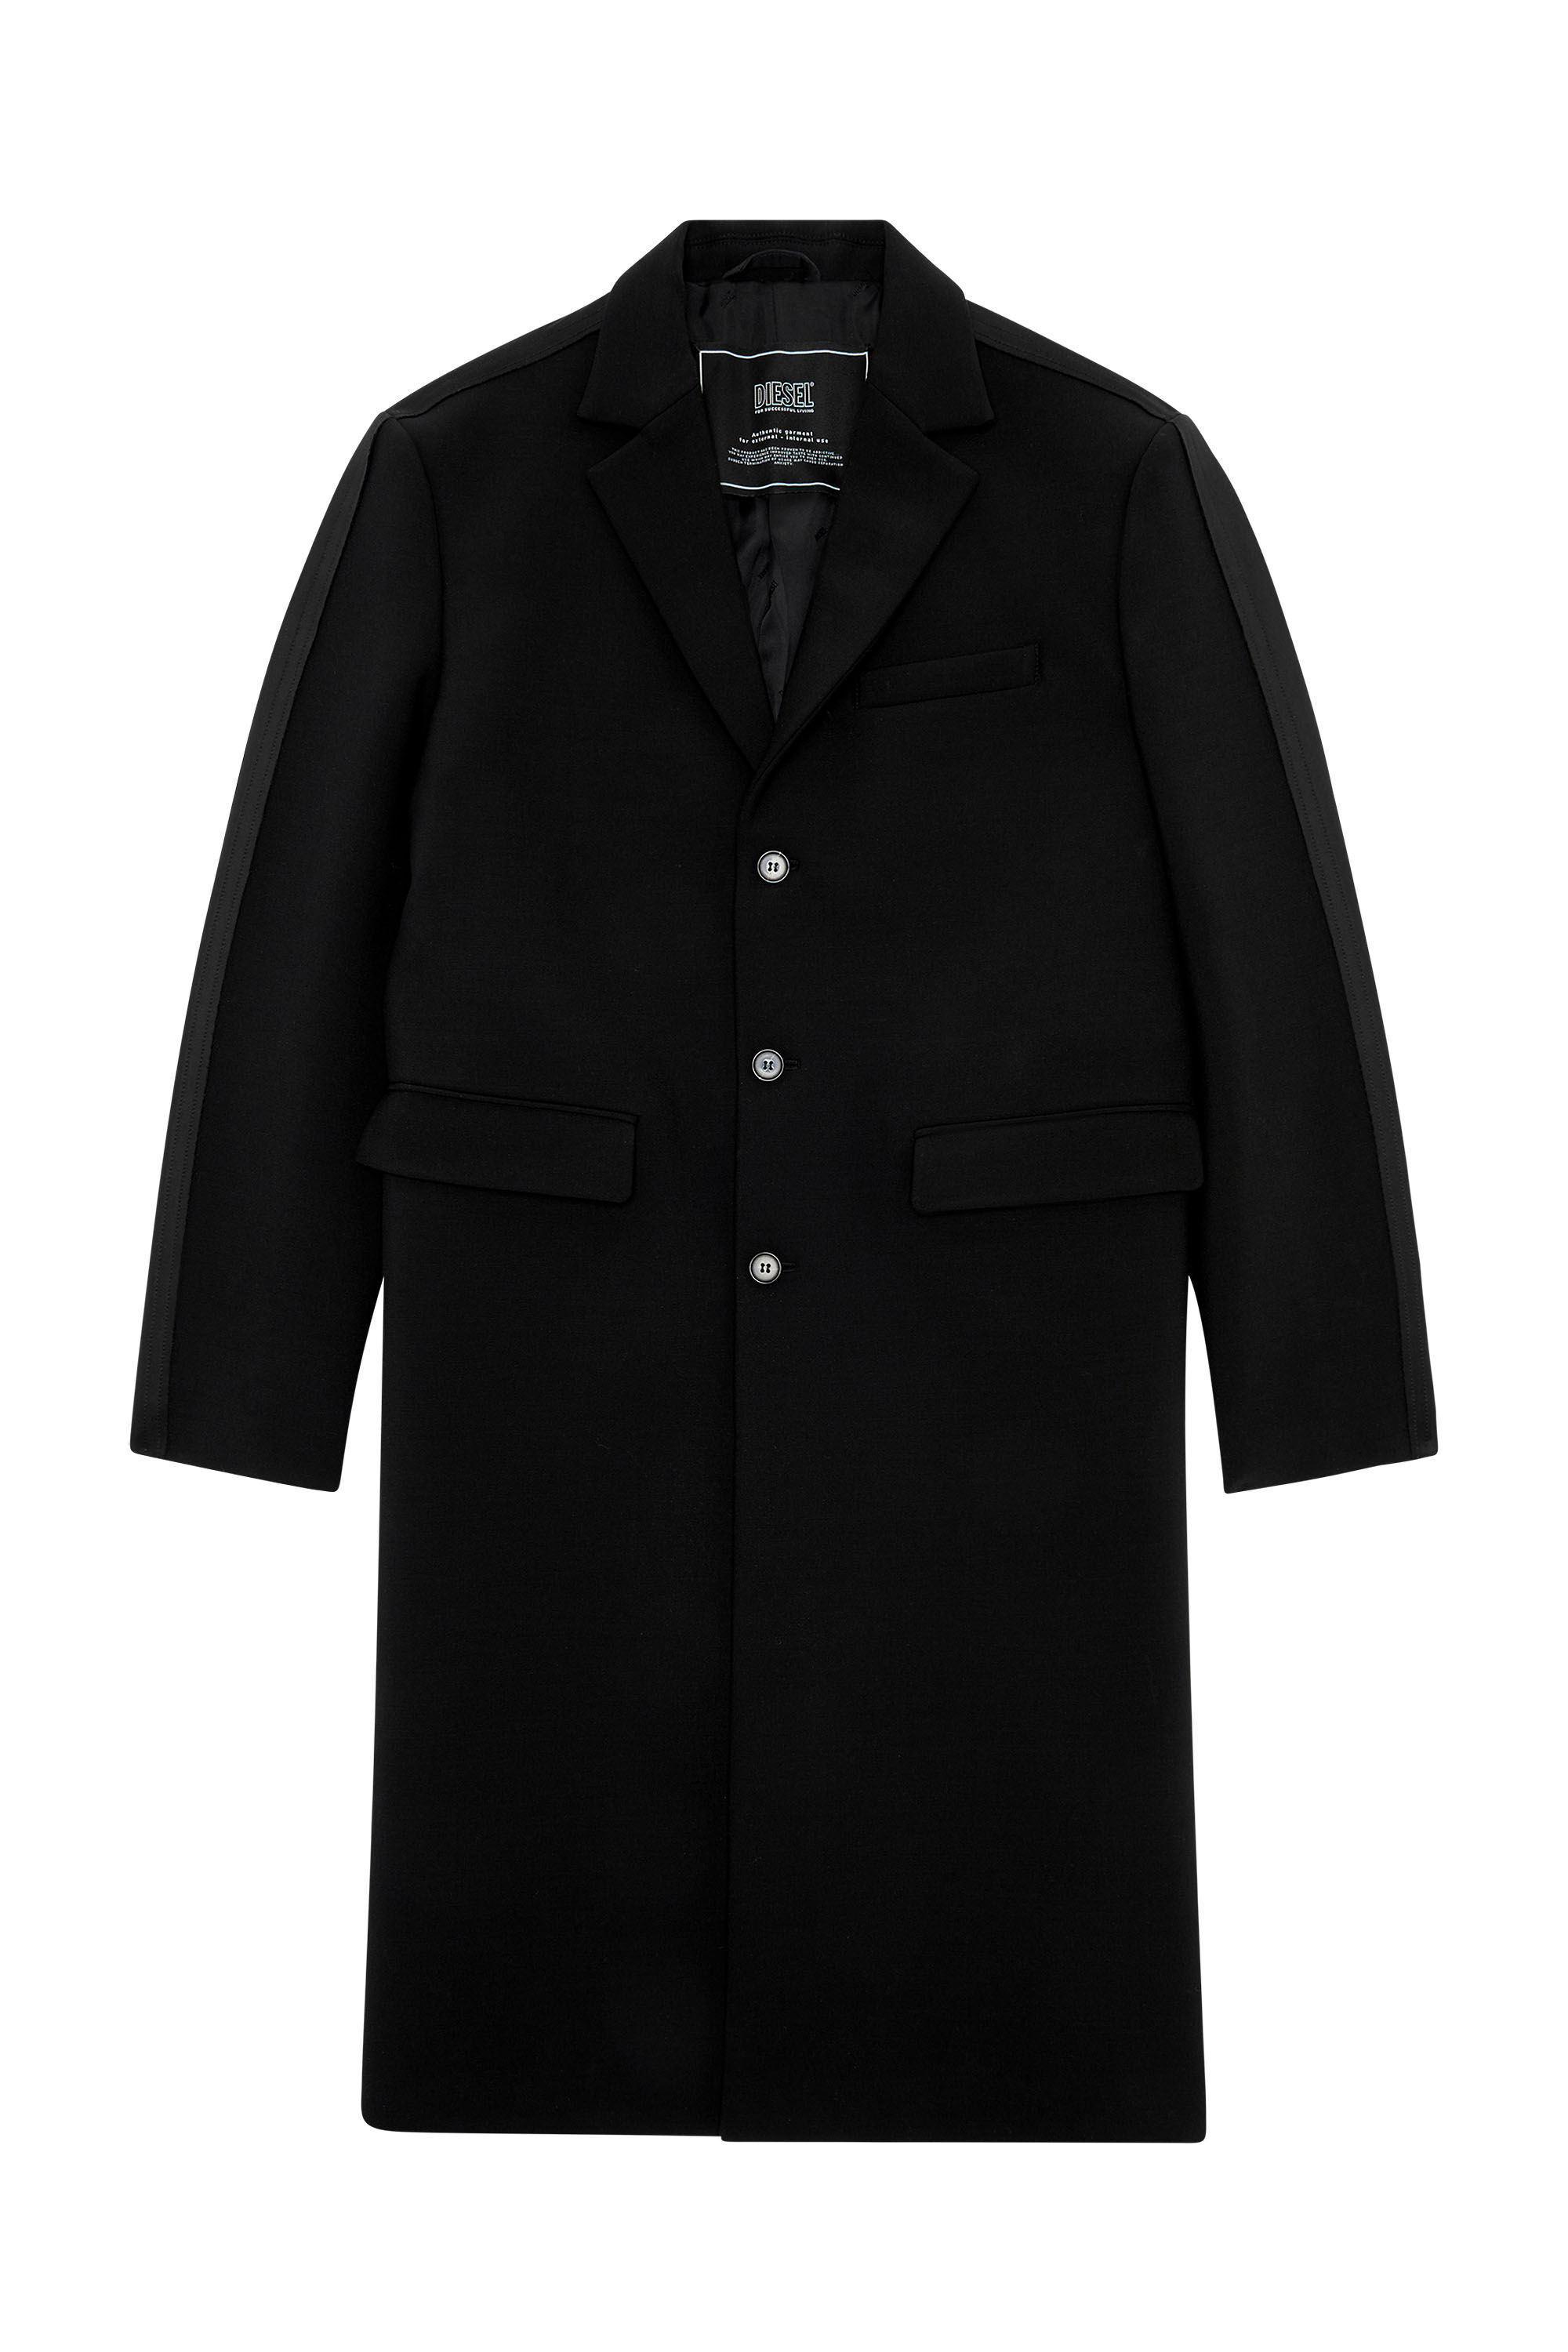 Diesel - J-DELLER, Man Hybrid coat in cool wool and jersey in Black - Image 2